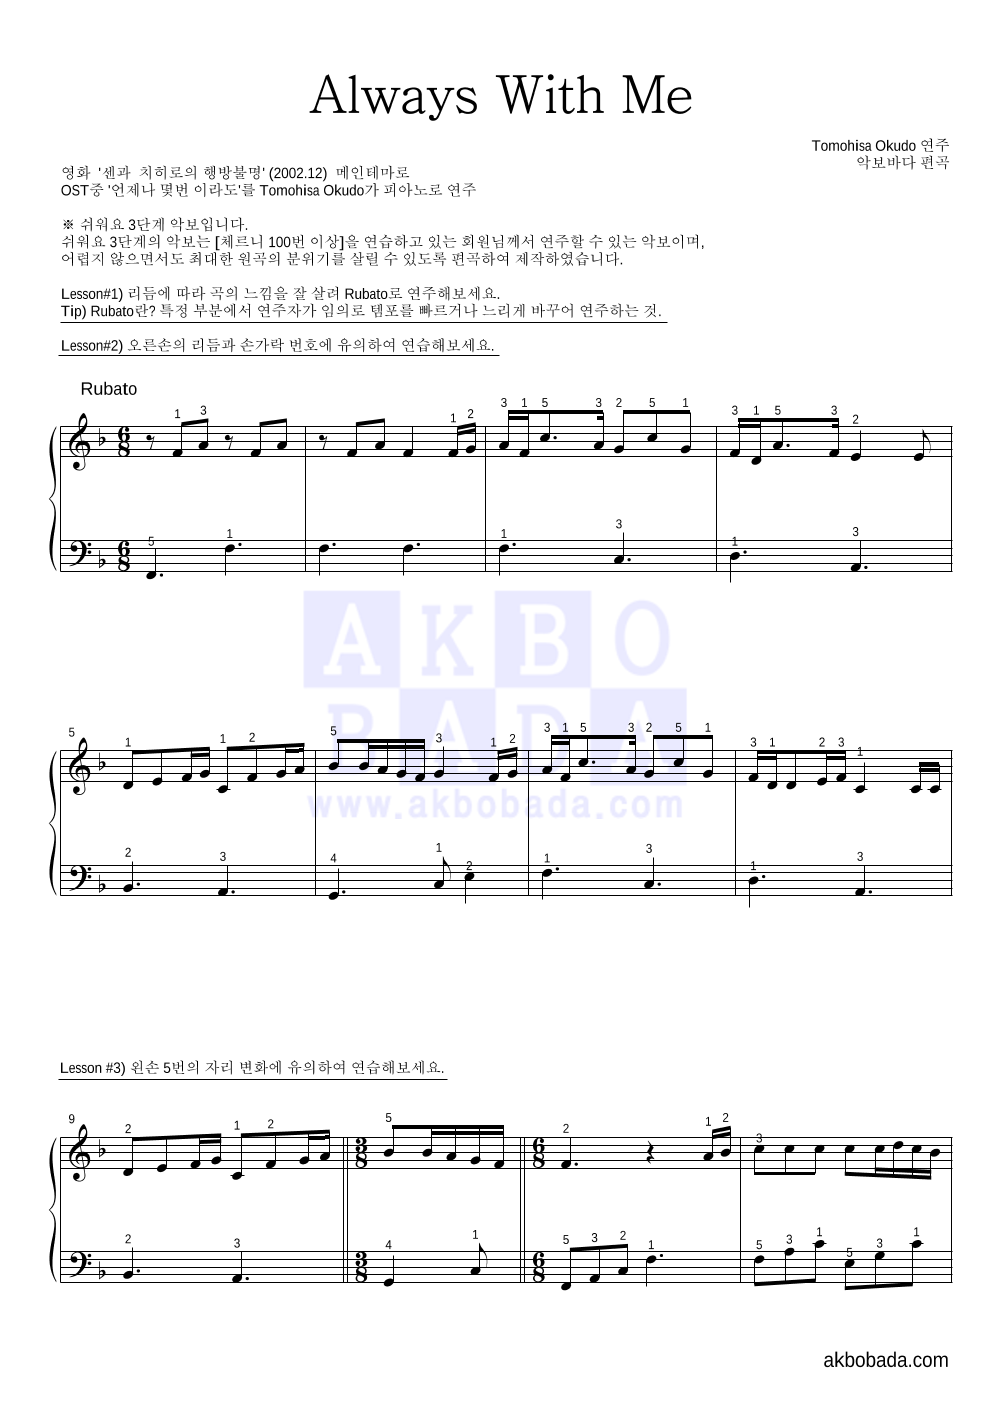 Hisaishi Joe - Always With Me (Piano Ver.) 피아노2단-쉬워요 악보 